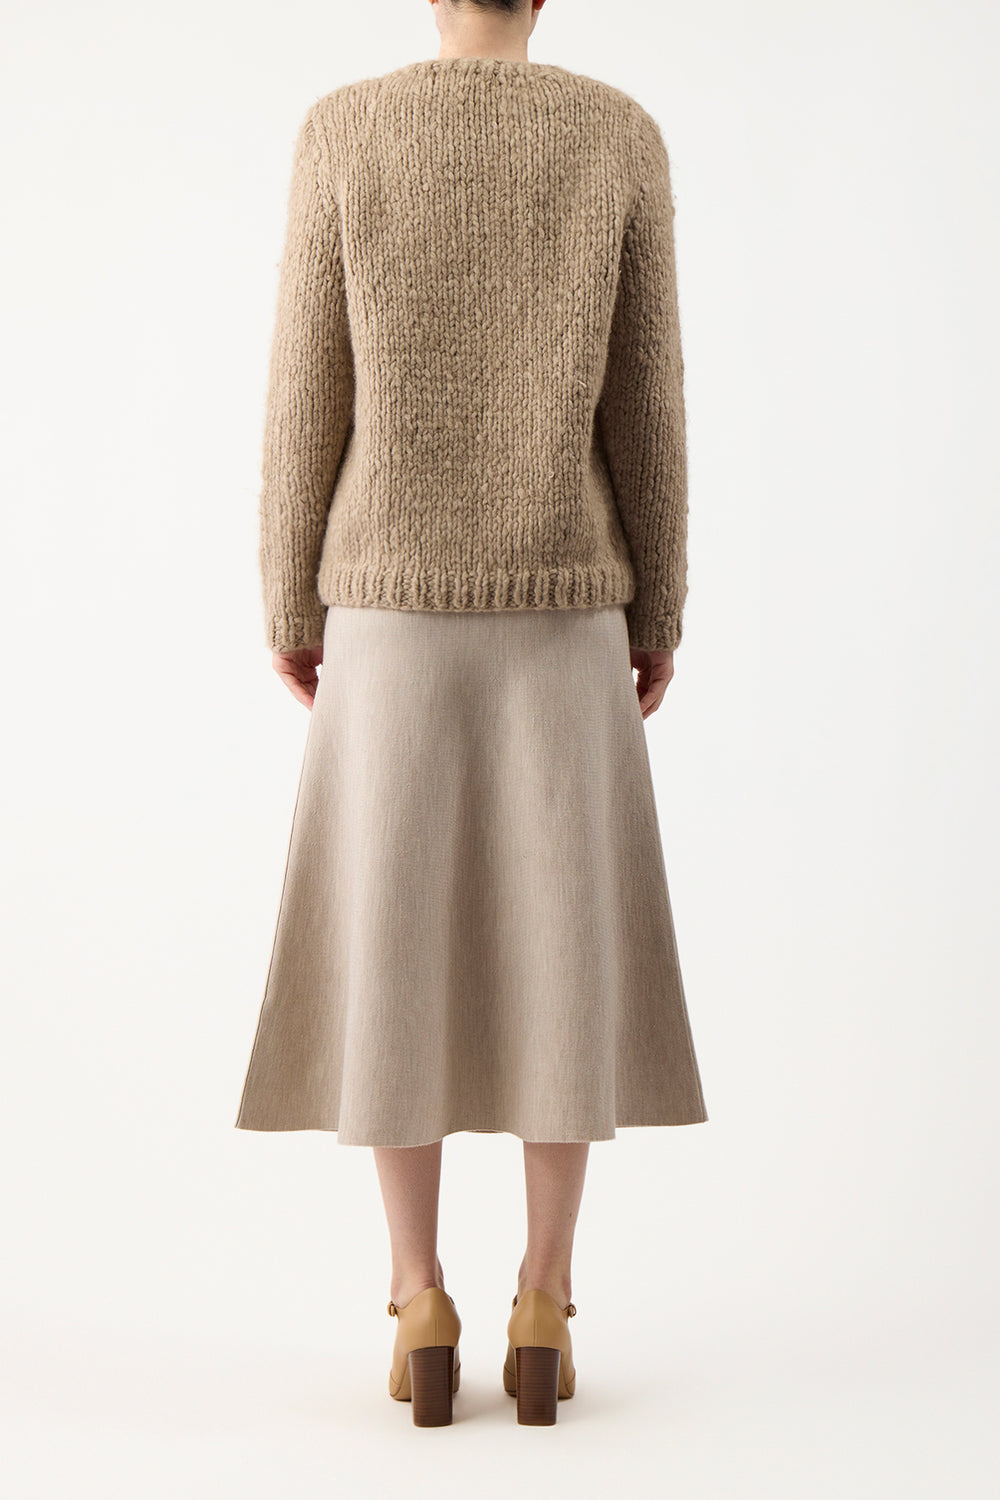 Freddie Knit Skirt in Oatmeal Merino Wool Cashmere – Gabriela Hearst